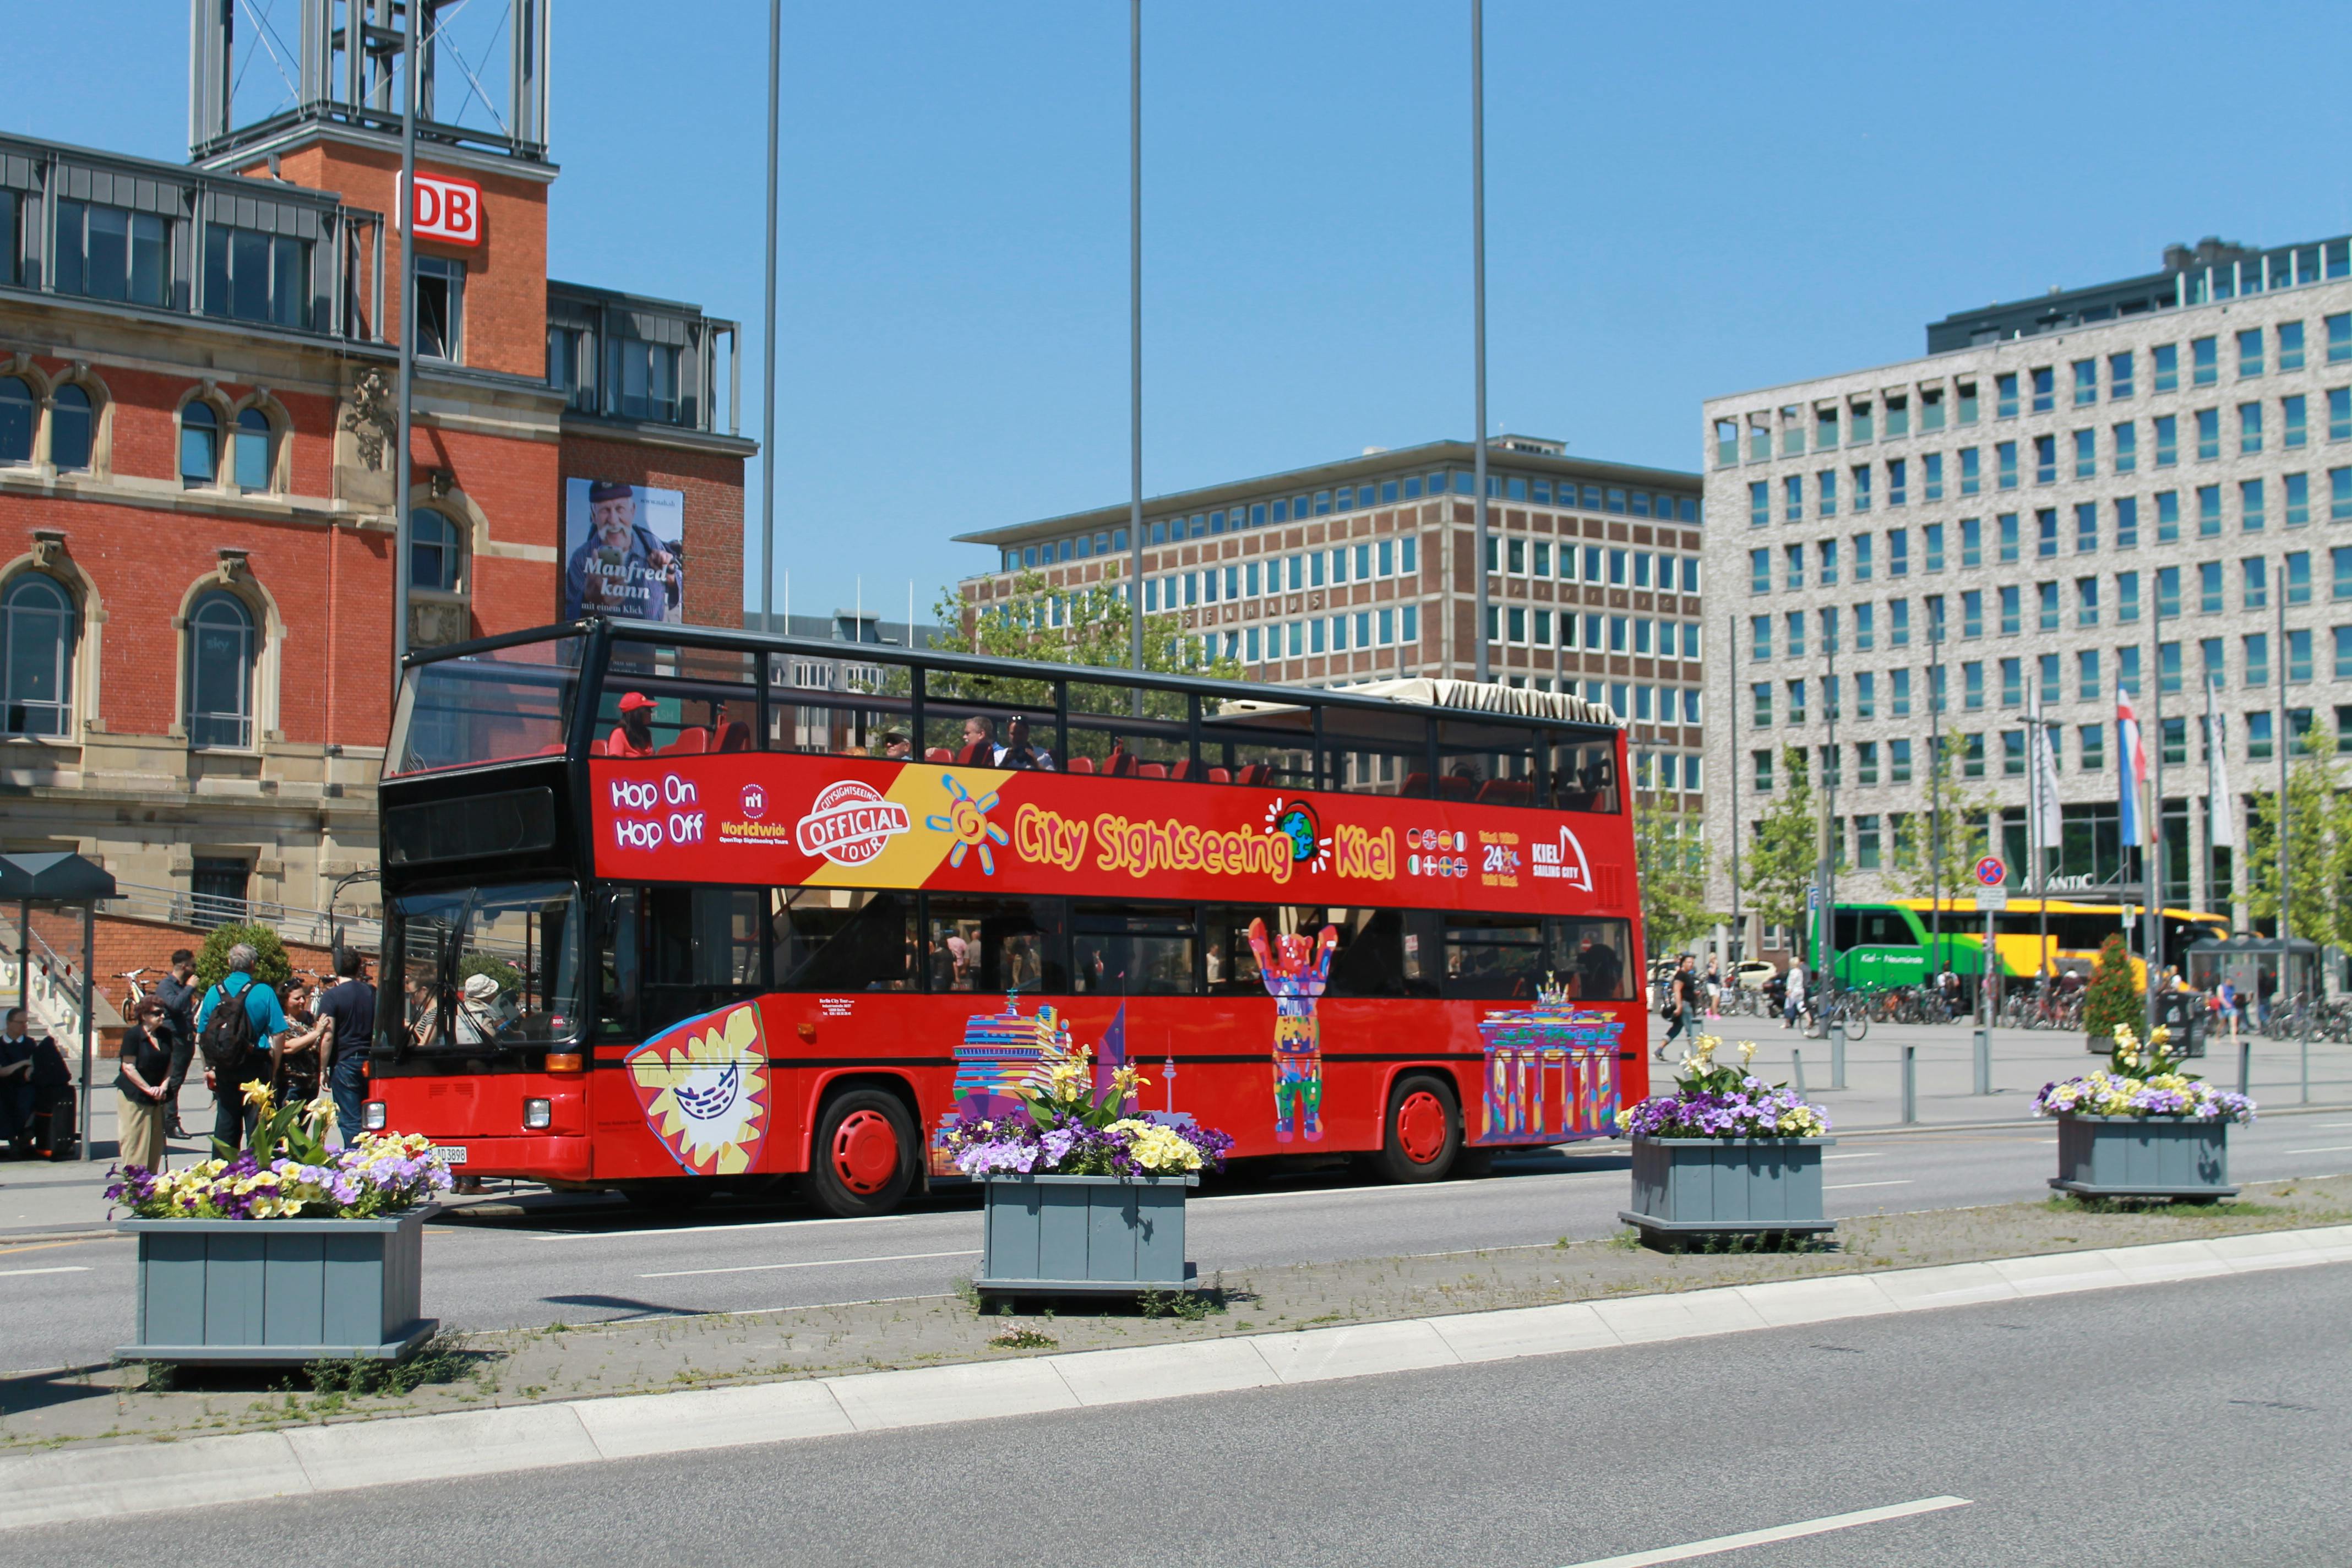 City Sightseeing hop-on hop-off bus tour of Kiel Musement